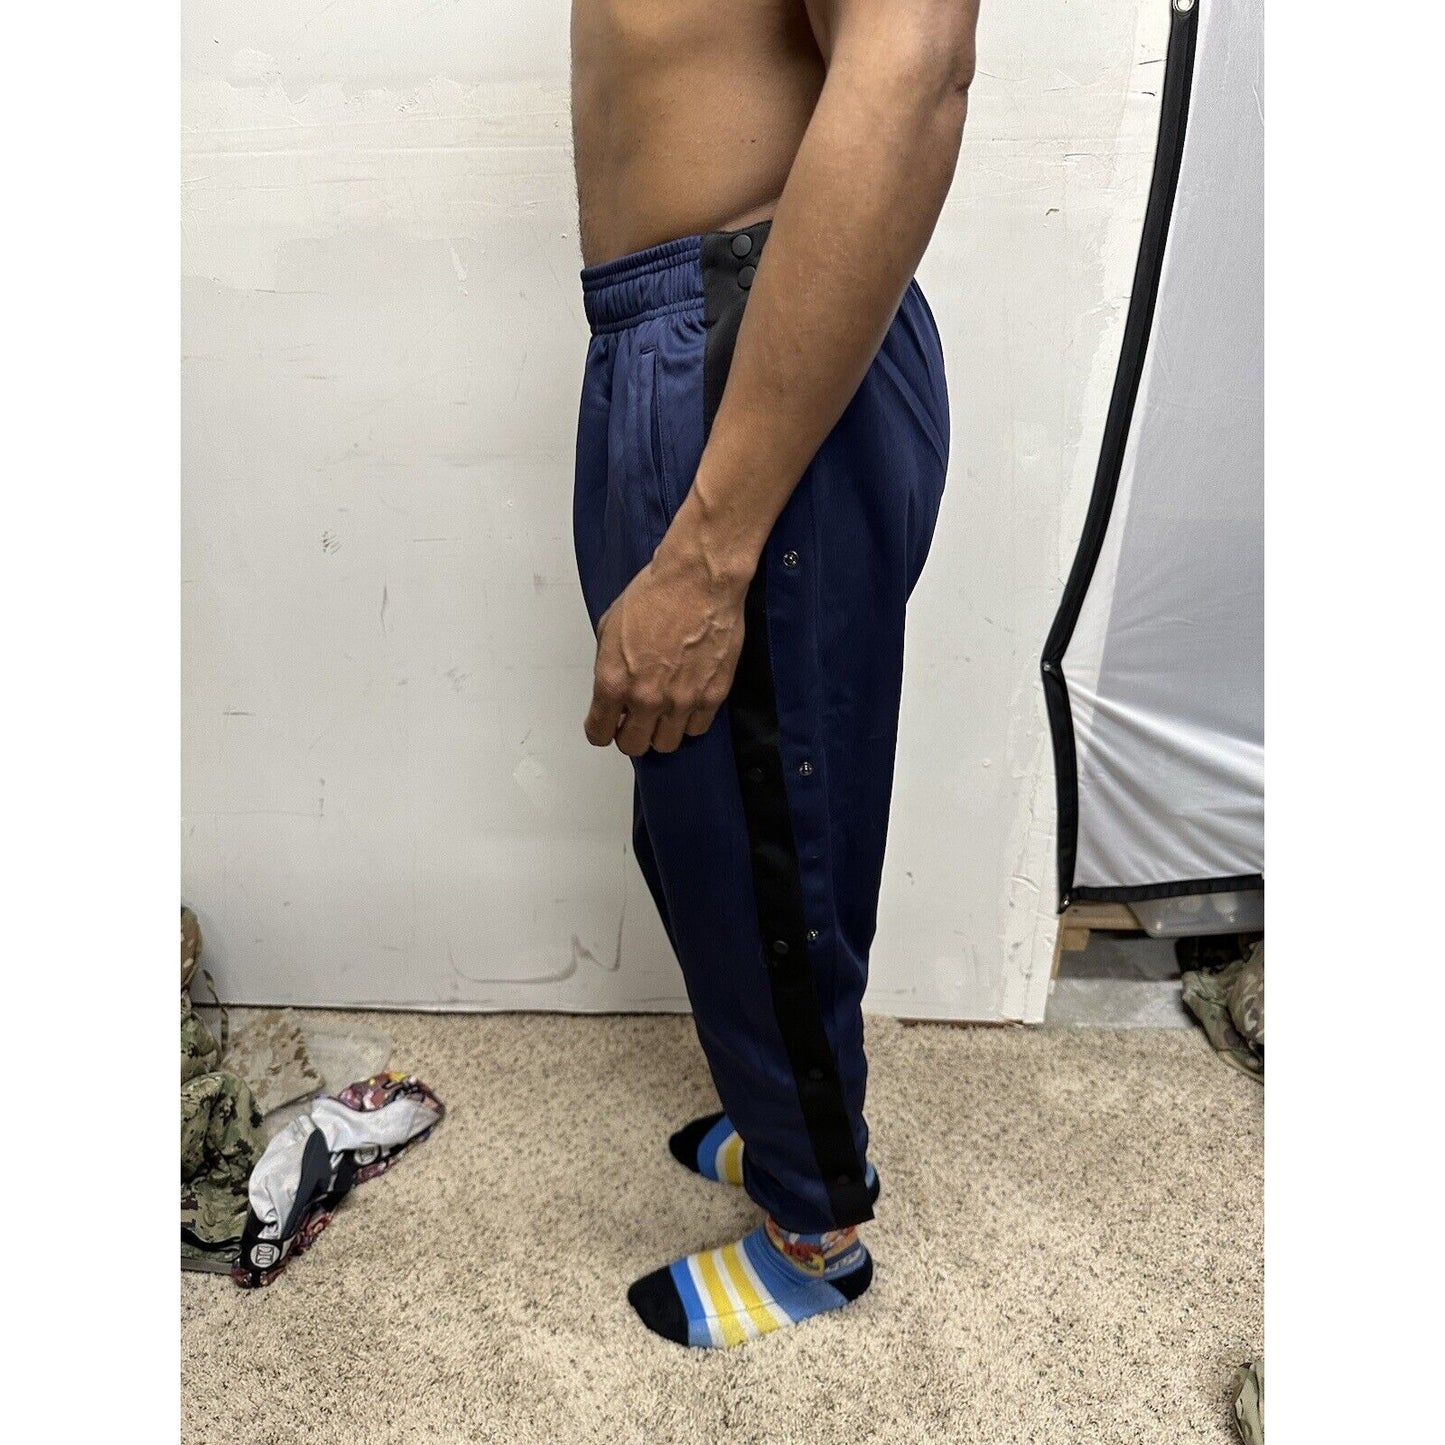 baleaf mens pants Snap Sides Track/basketball small blue